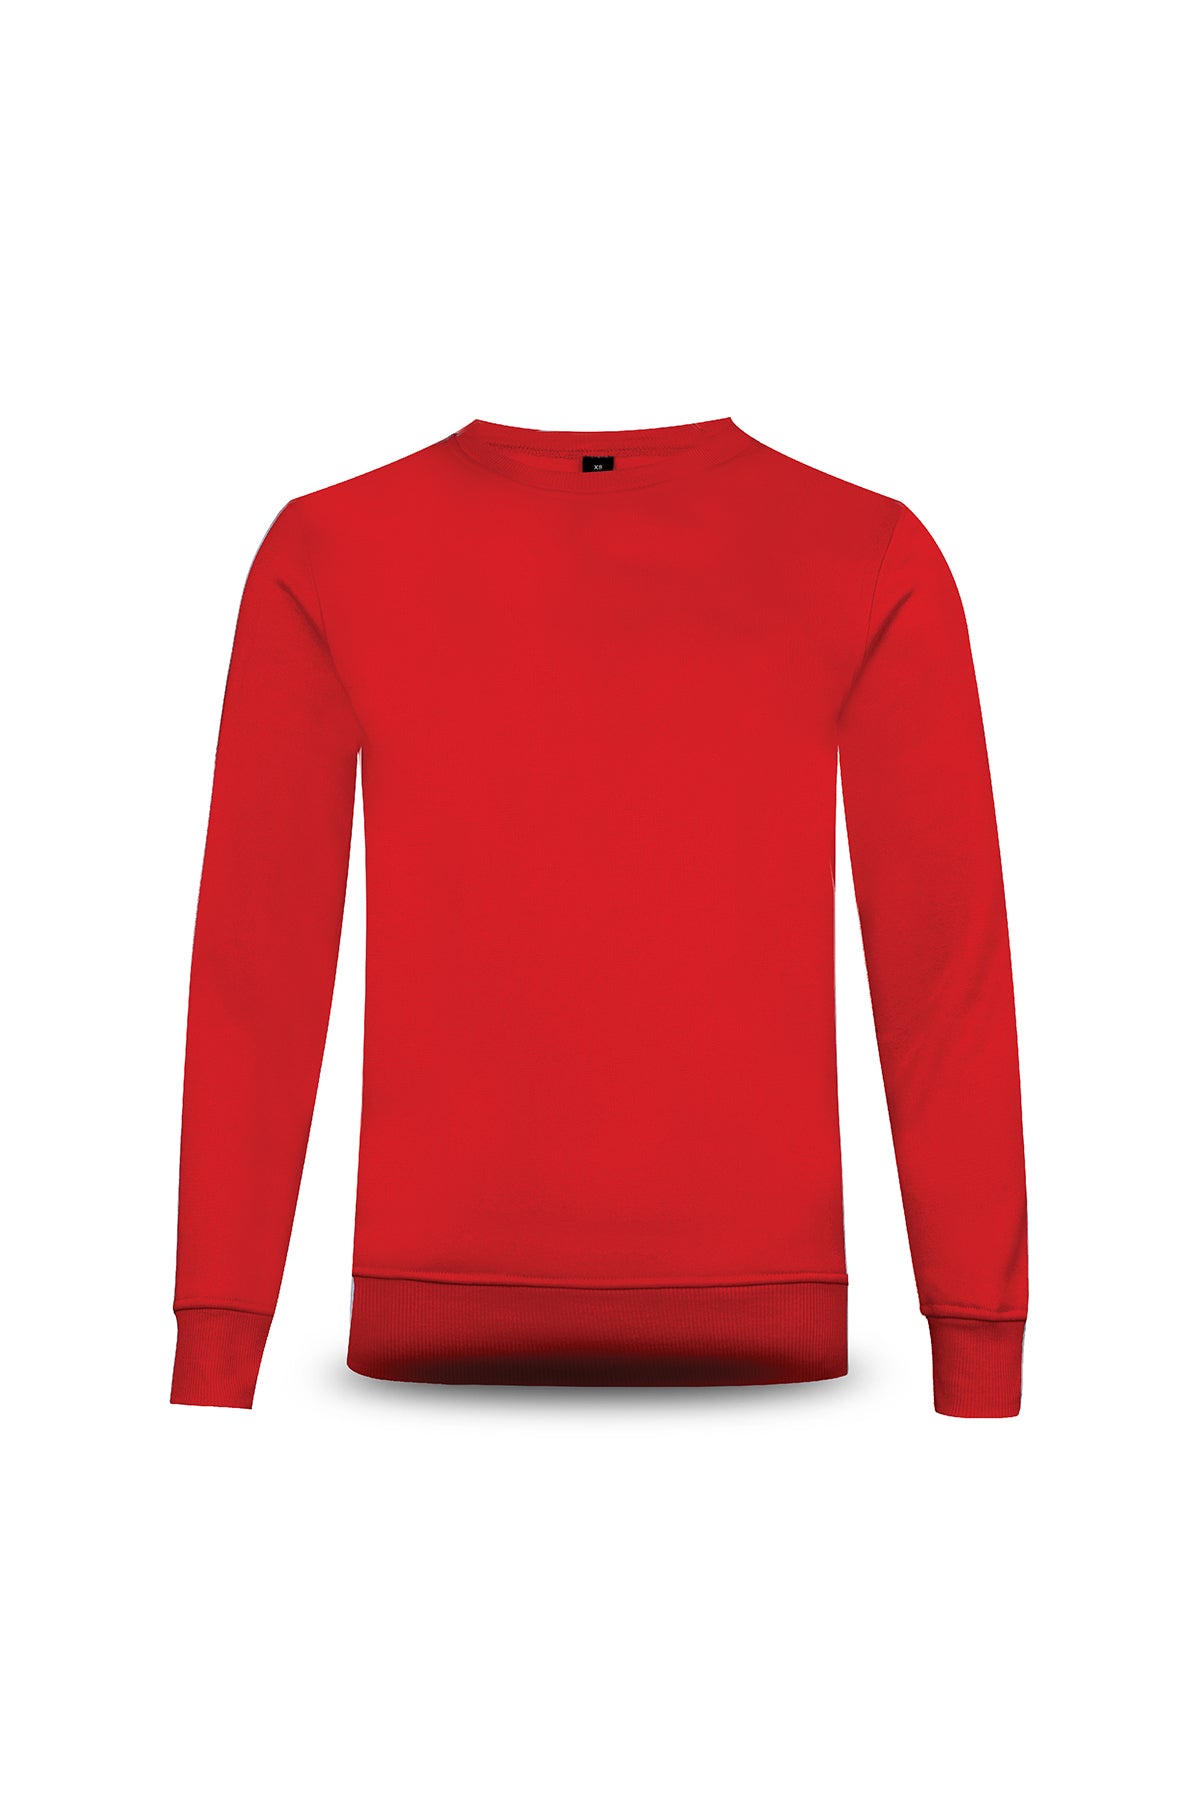 Beam Long Sleeve Sweat Shirt Red